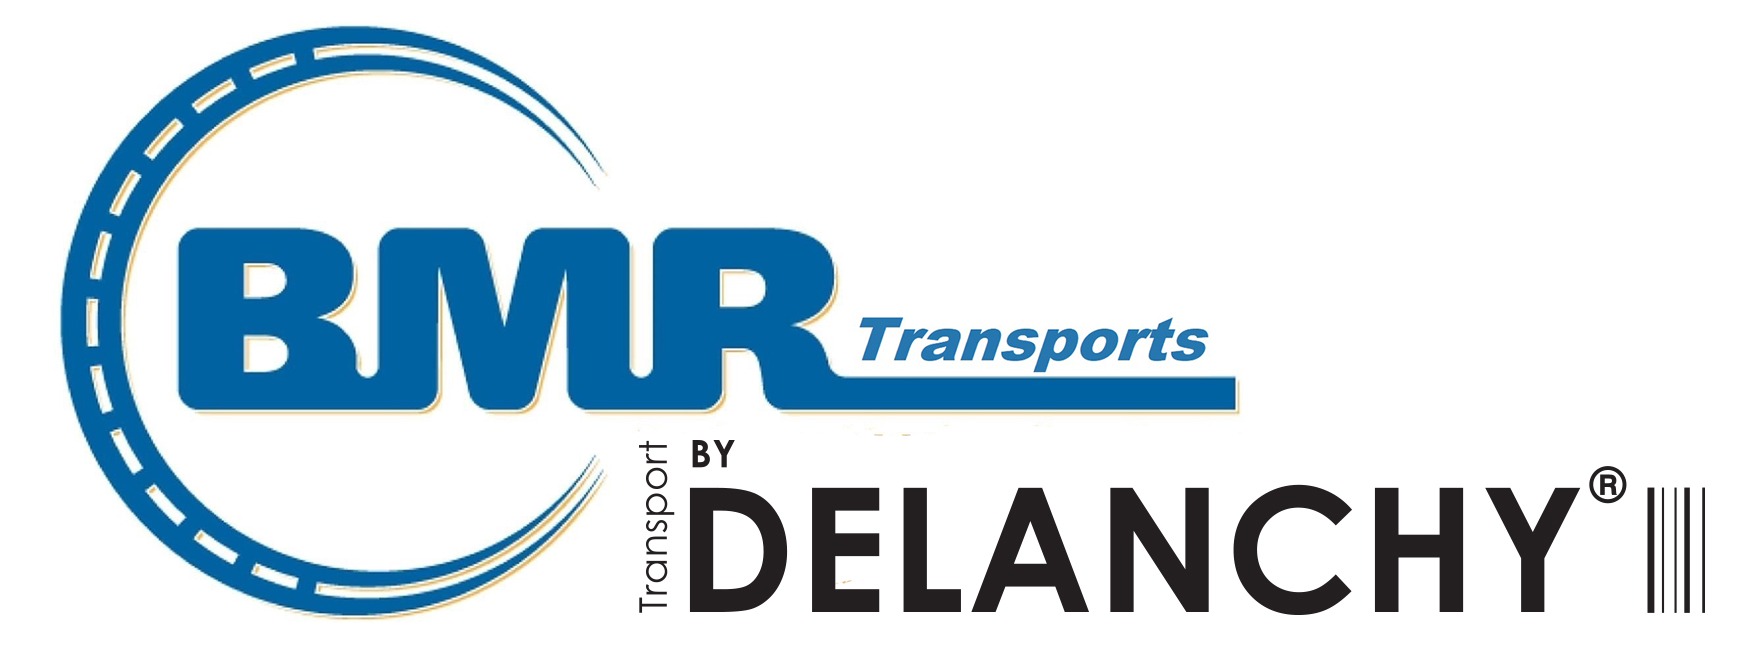 BMR Transports se une al Grupo DELANCHY